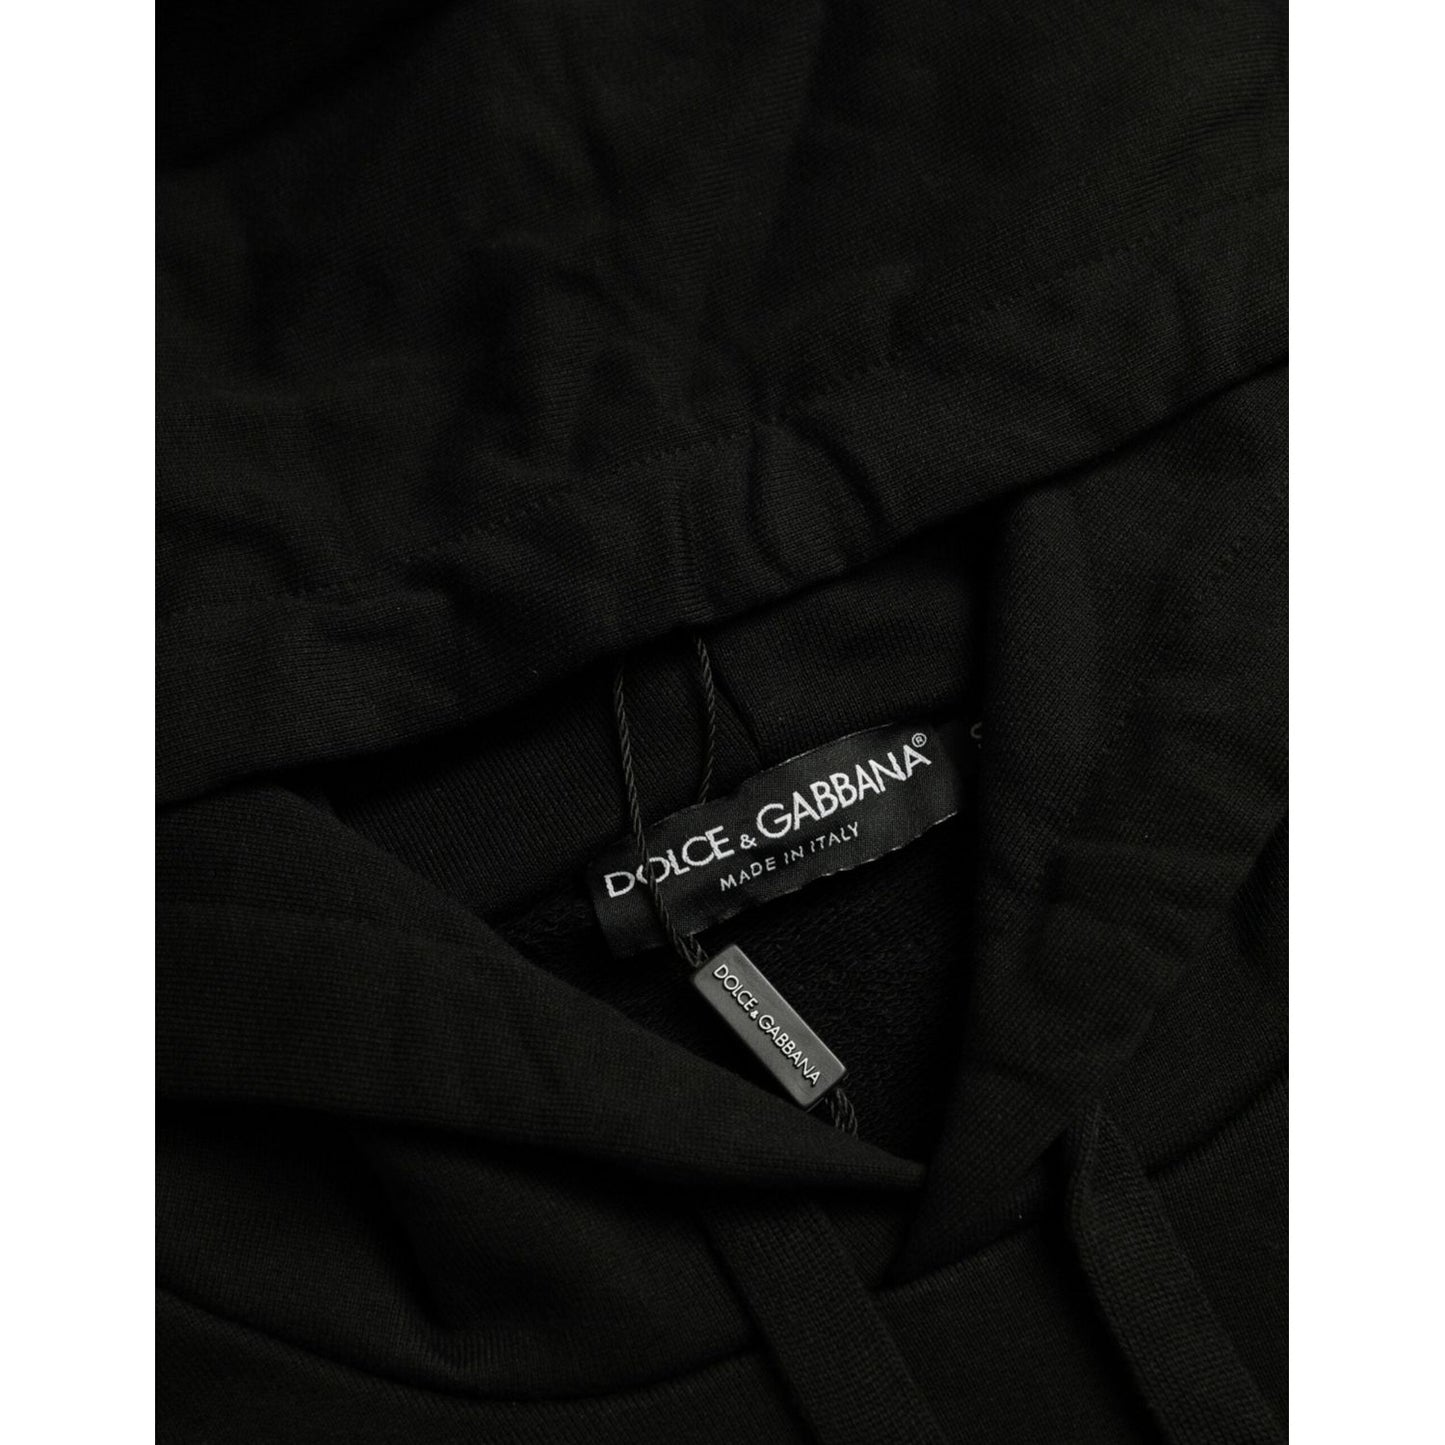 Dolce & Gabbana Black Cotton Hooded Sweatshirt Sweater black-cotton-hooded-sweatshirt-sweater